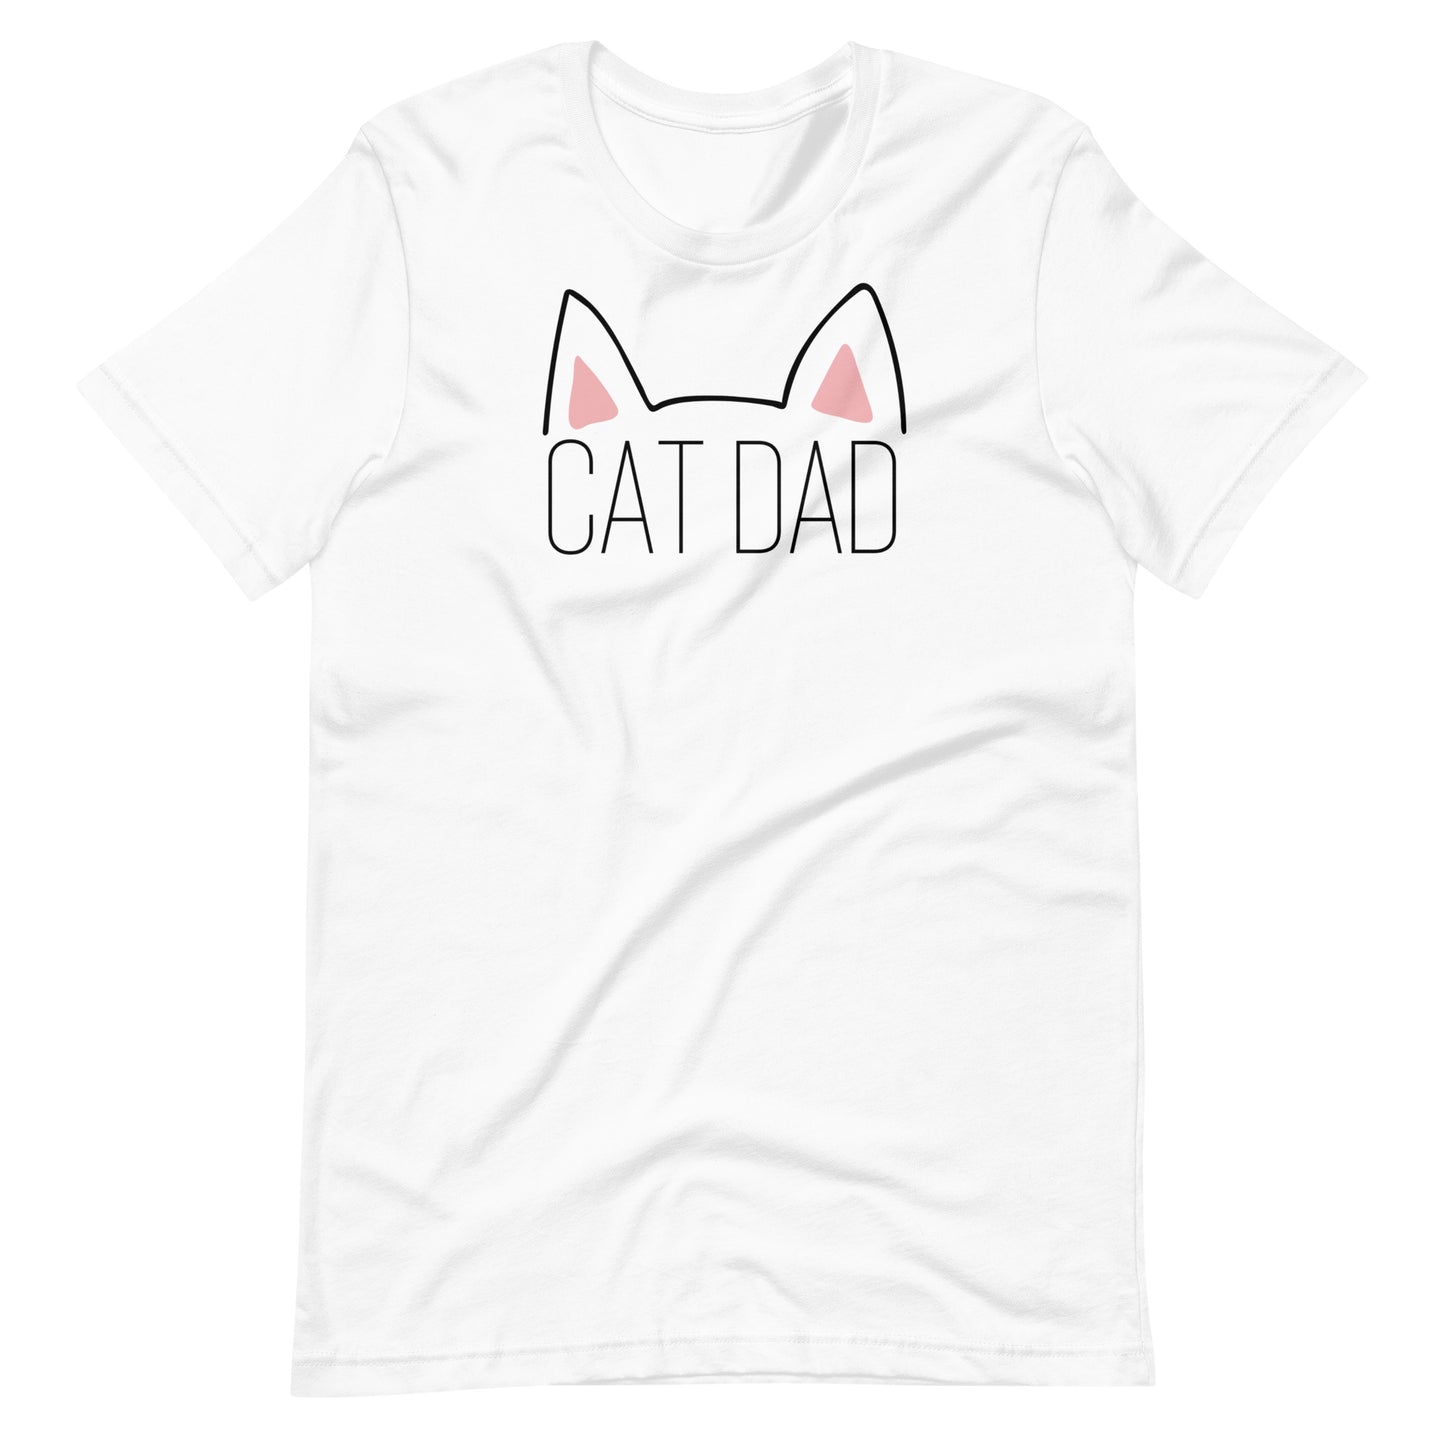 Cat Dad Tee (White)